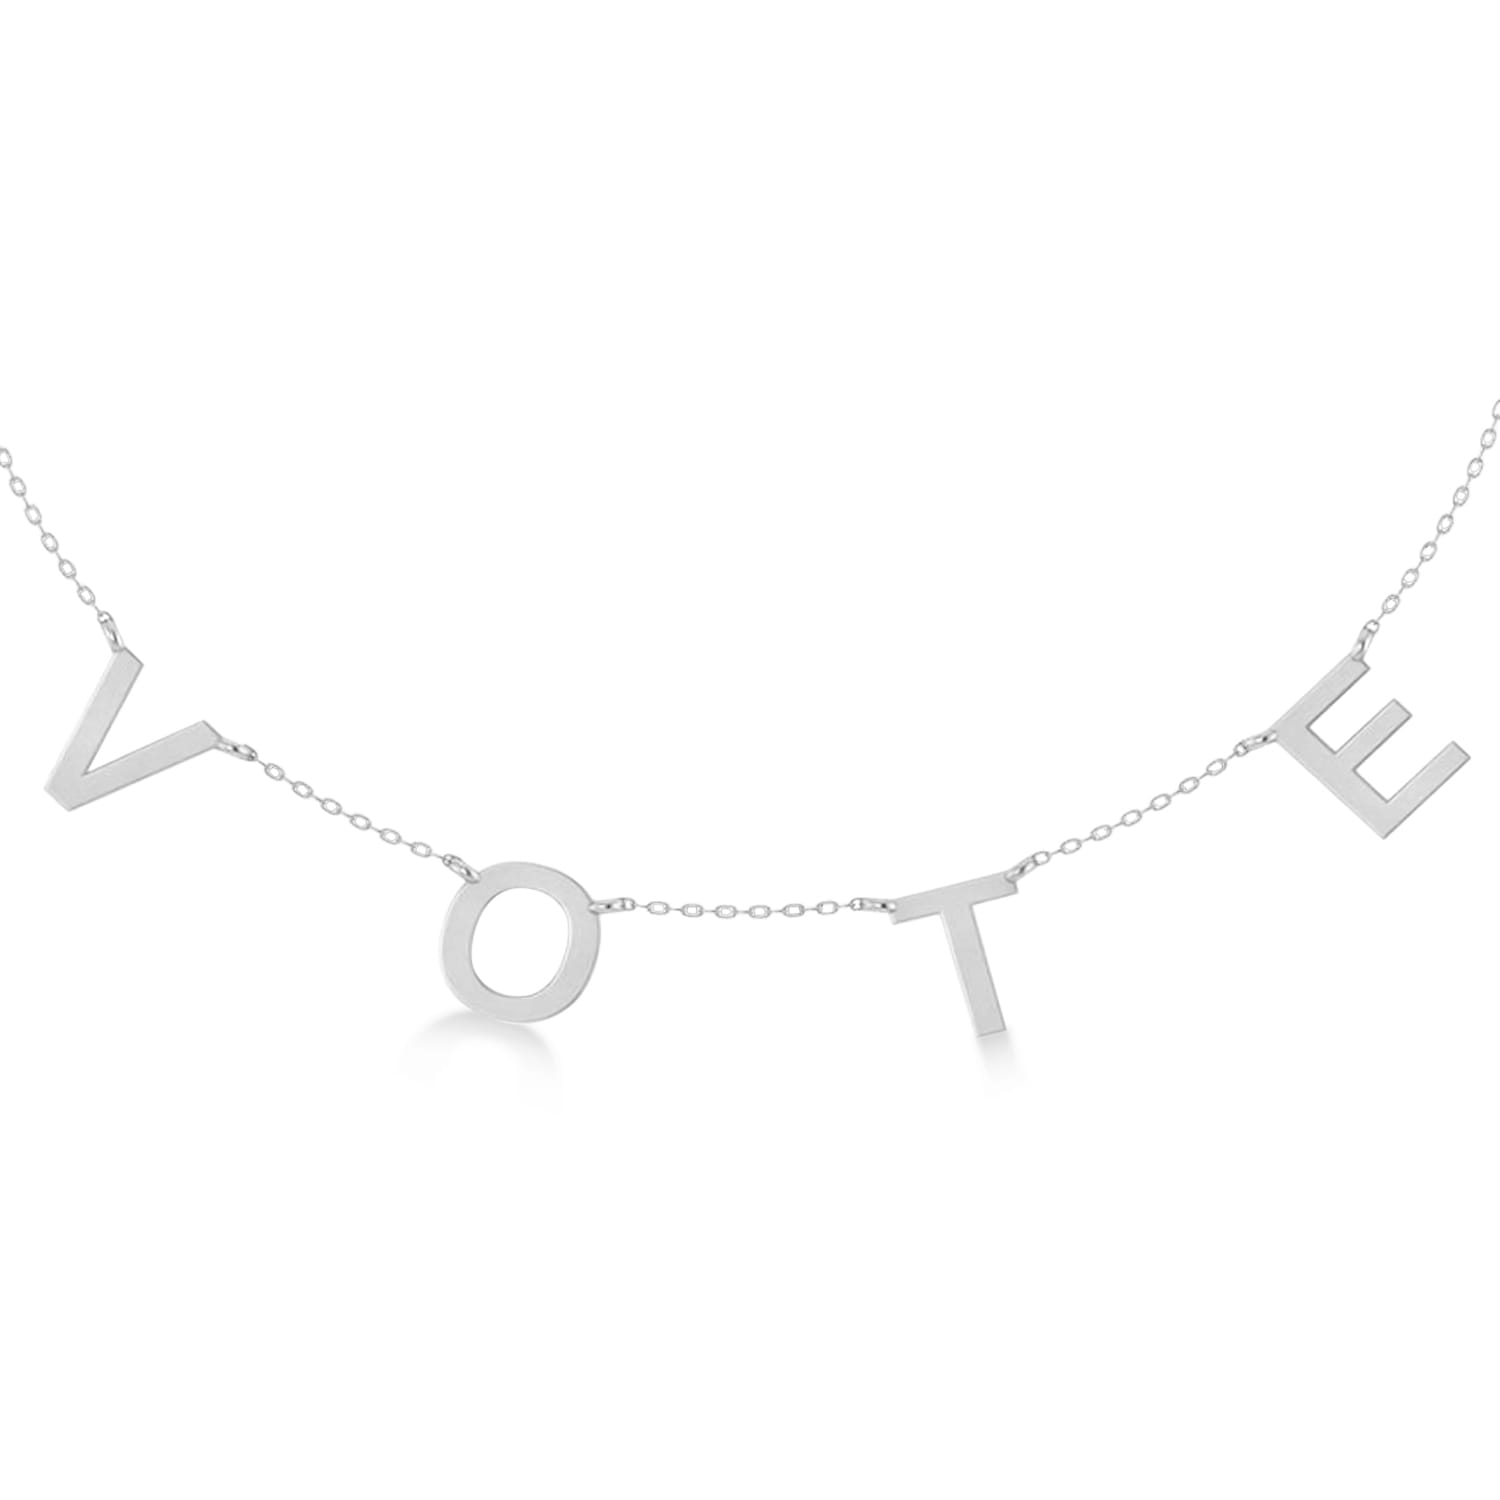 Block Letters VOTE Pendant Necklace 14k White Gold